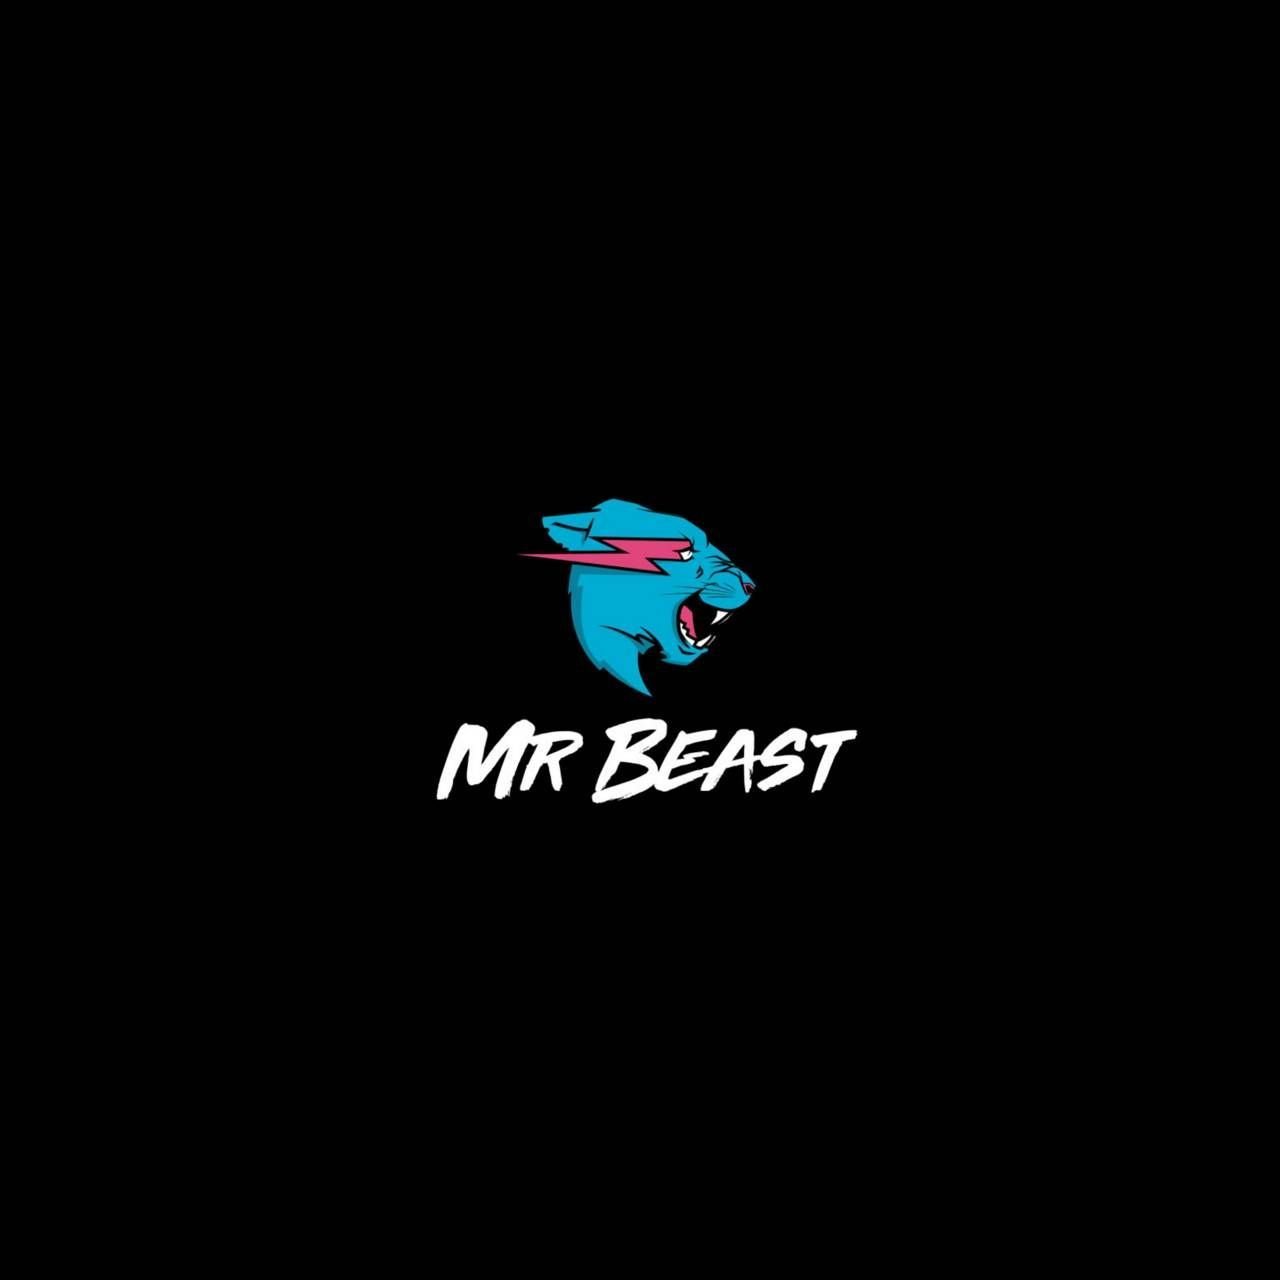 Mr Beast Wallpaper Free Mr Beast .wallpaperaccess.com